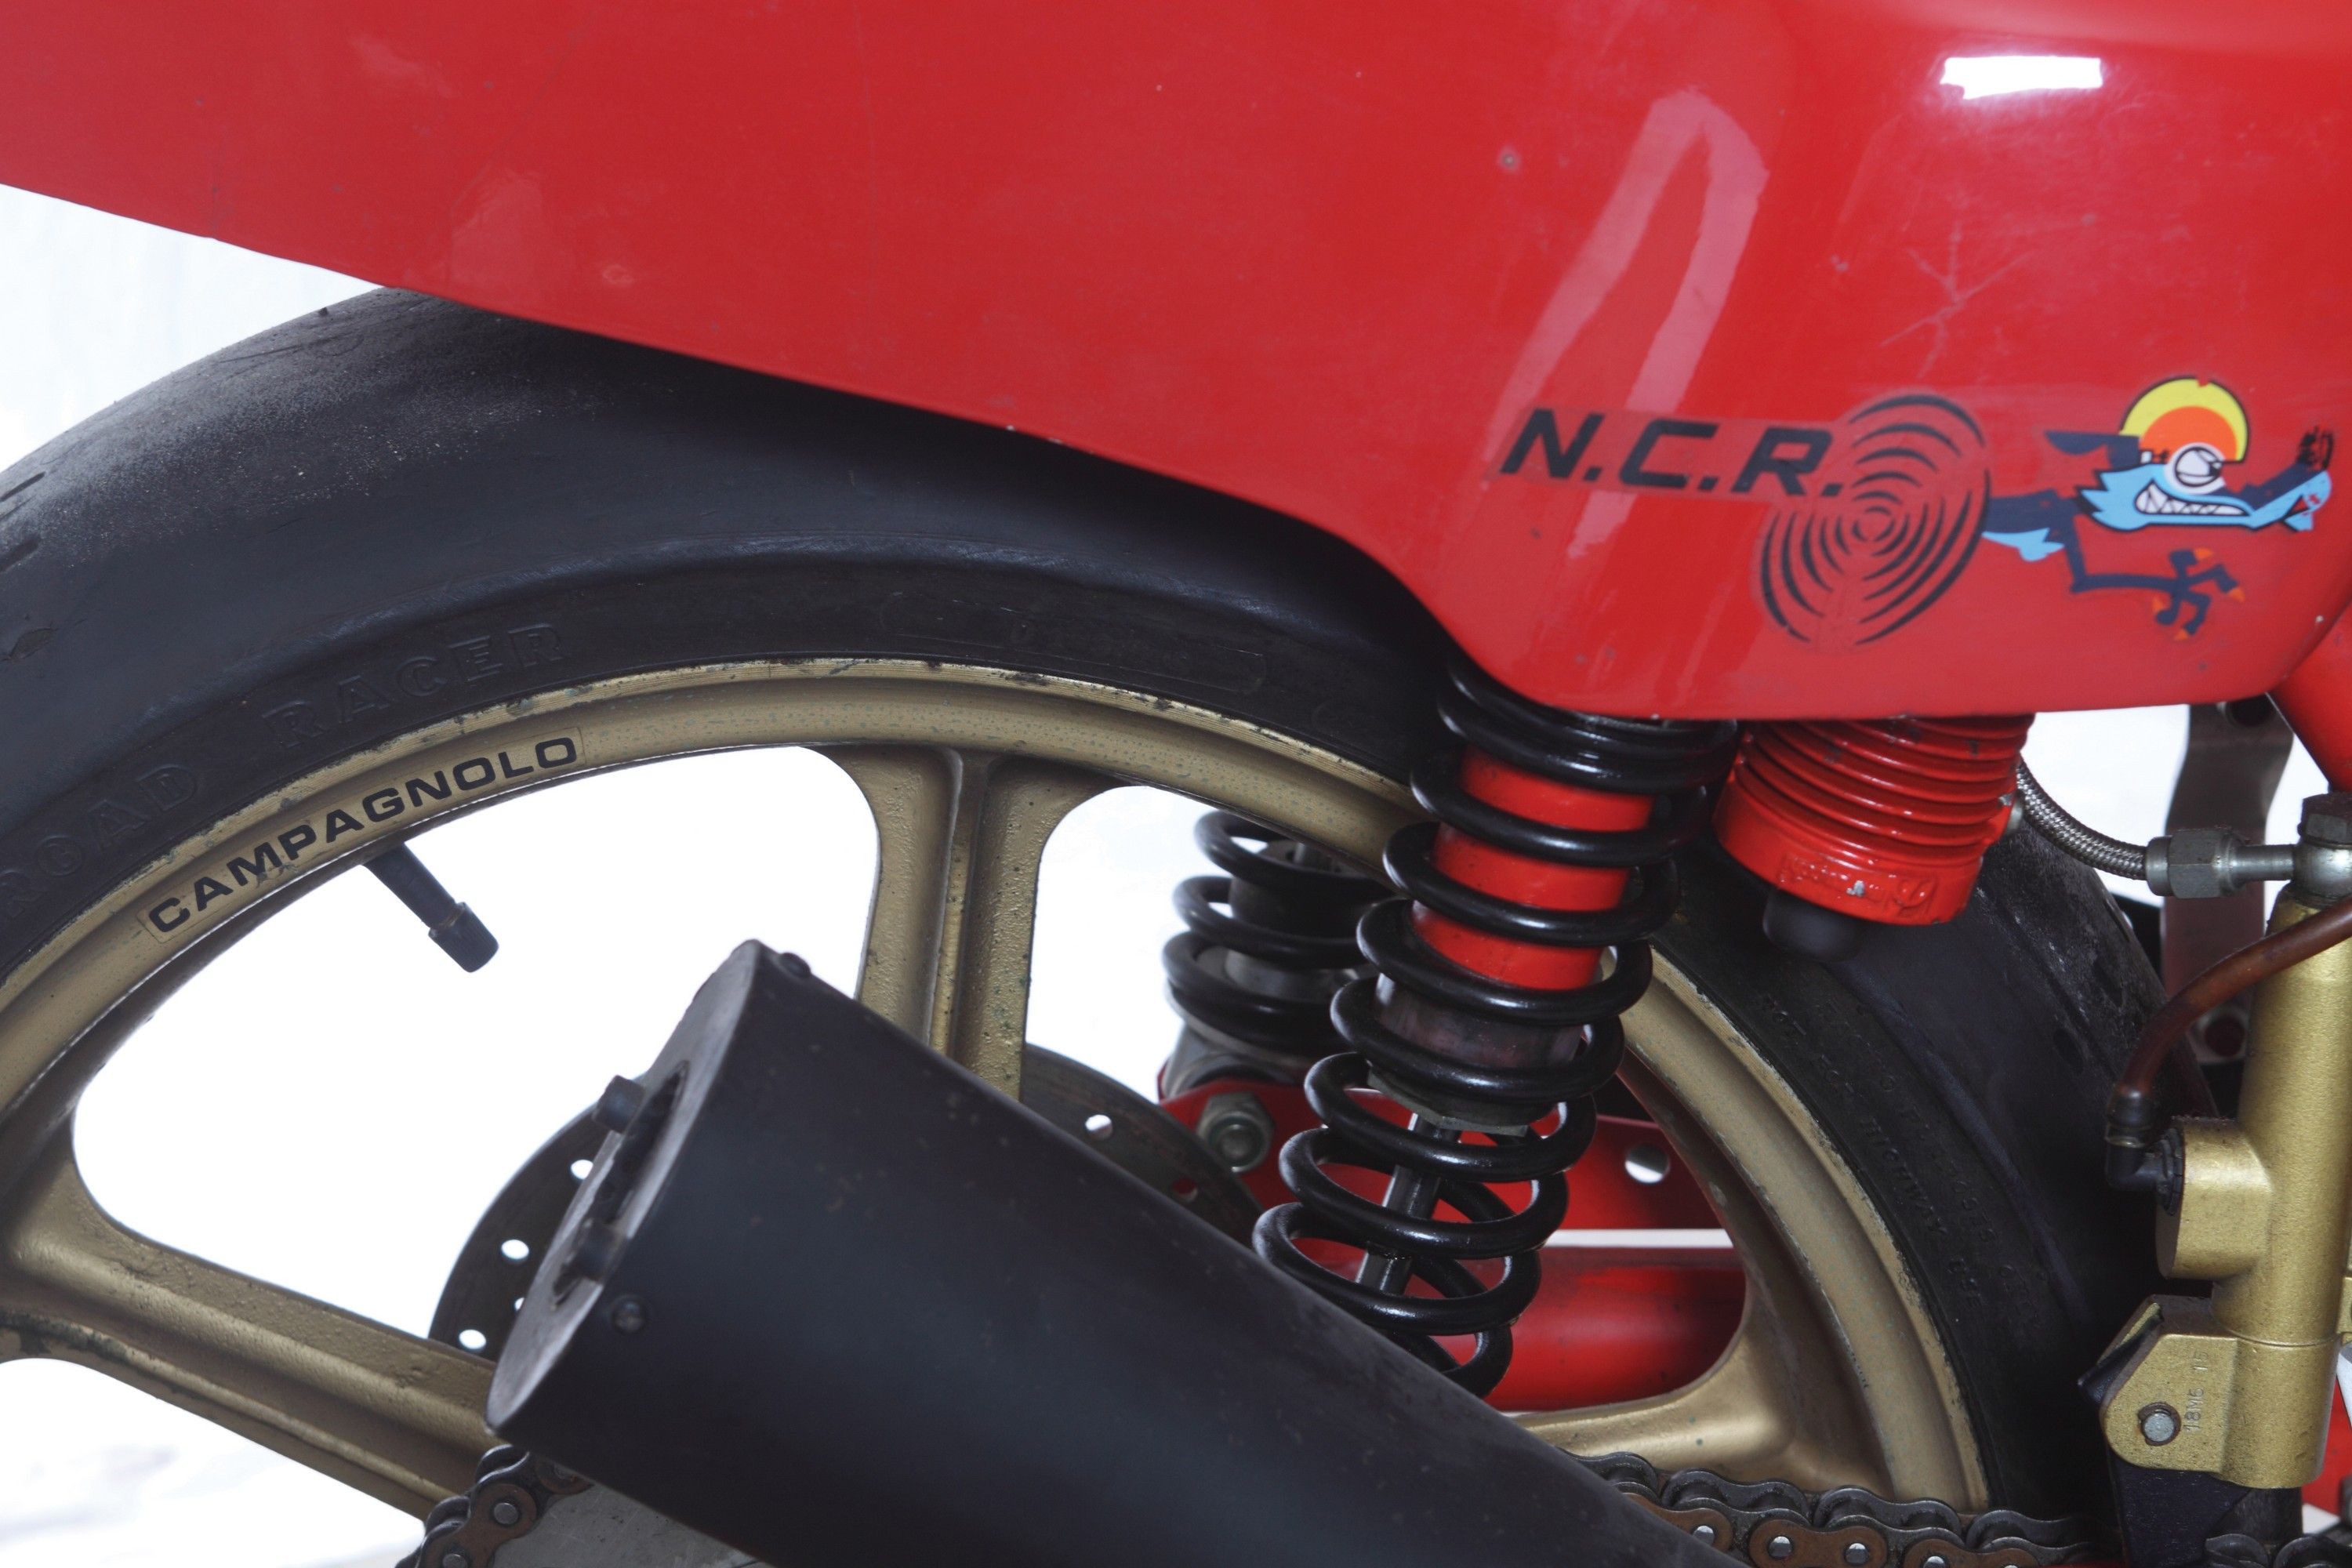 1978 Ducati 860 NCR Corsa